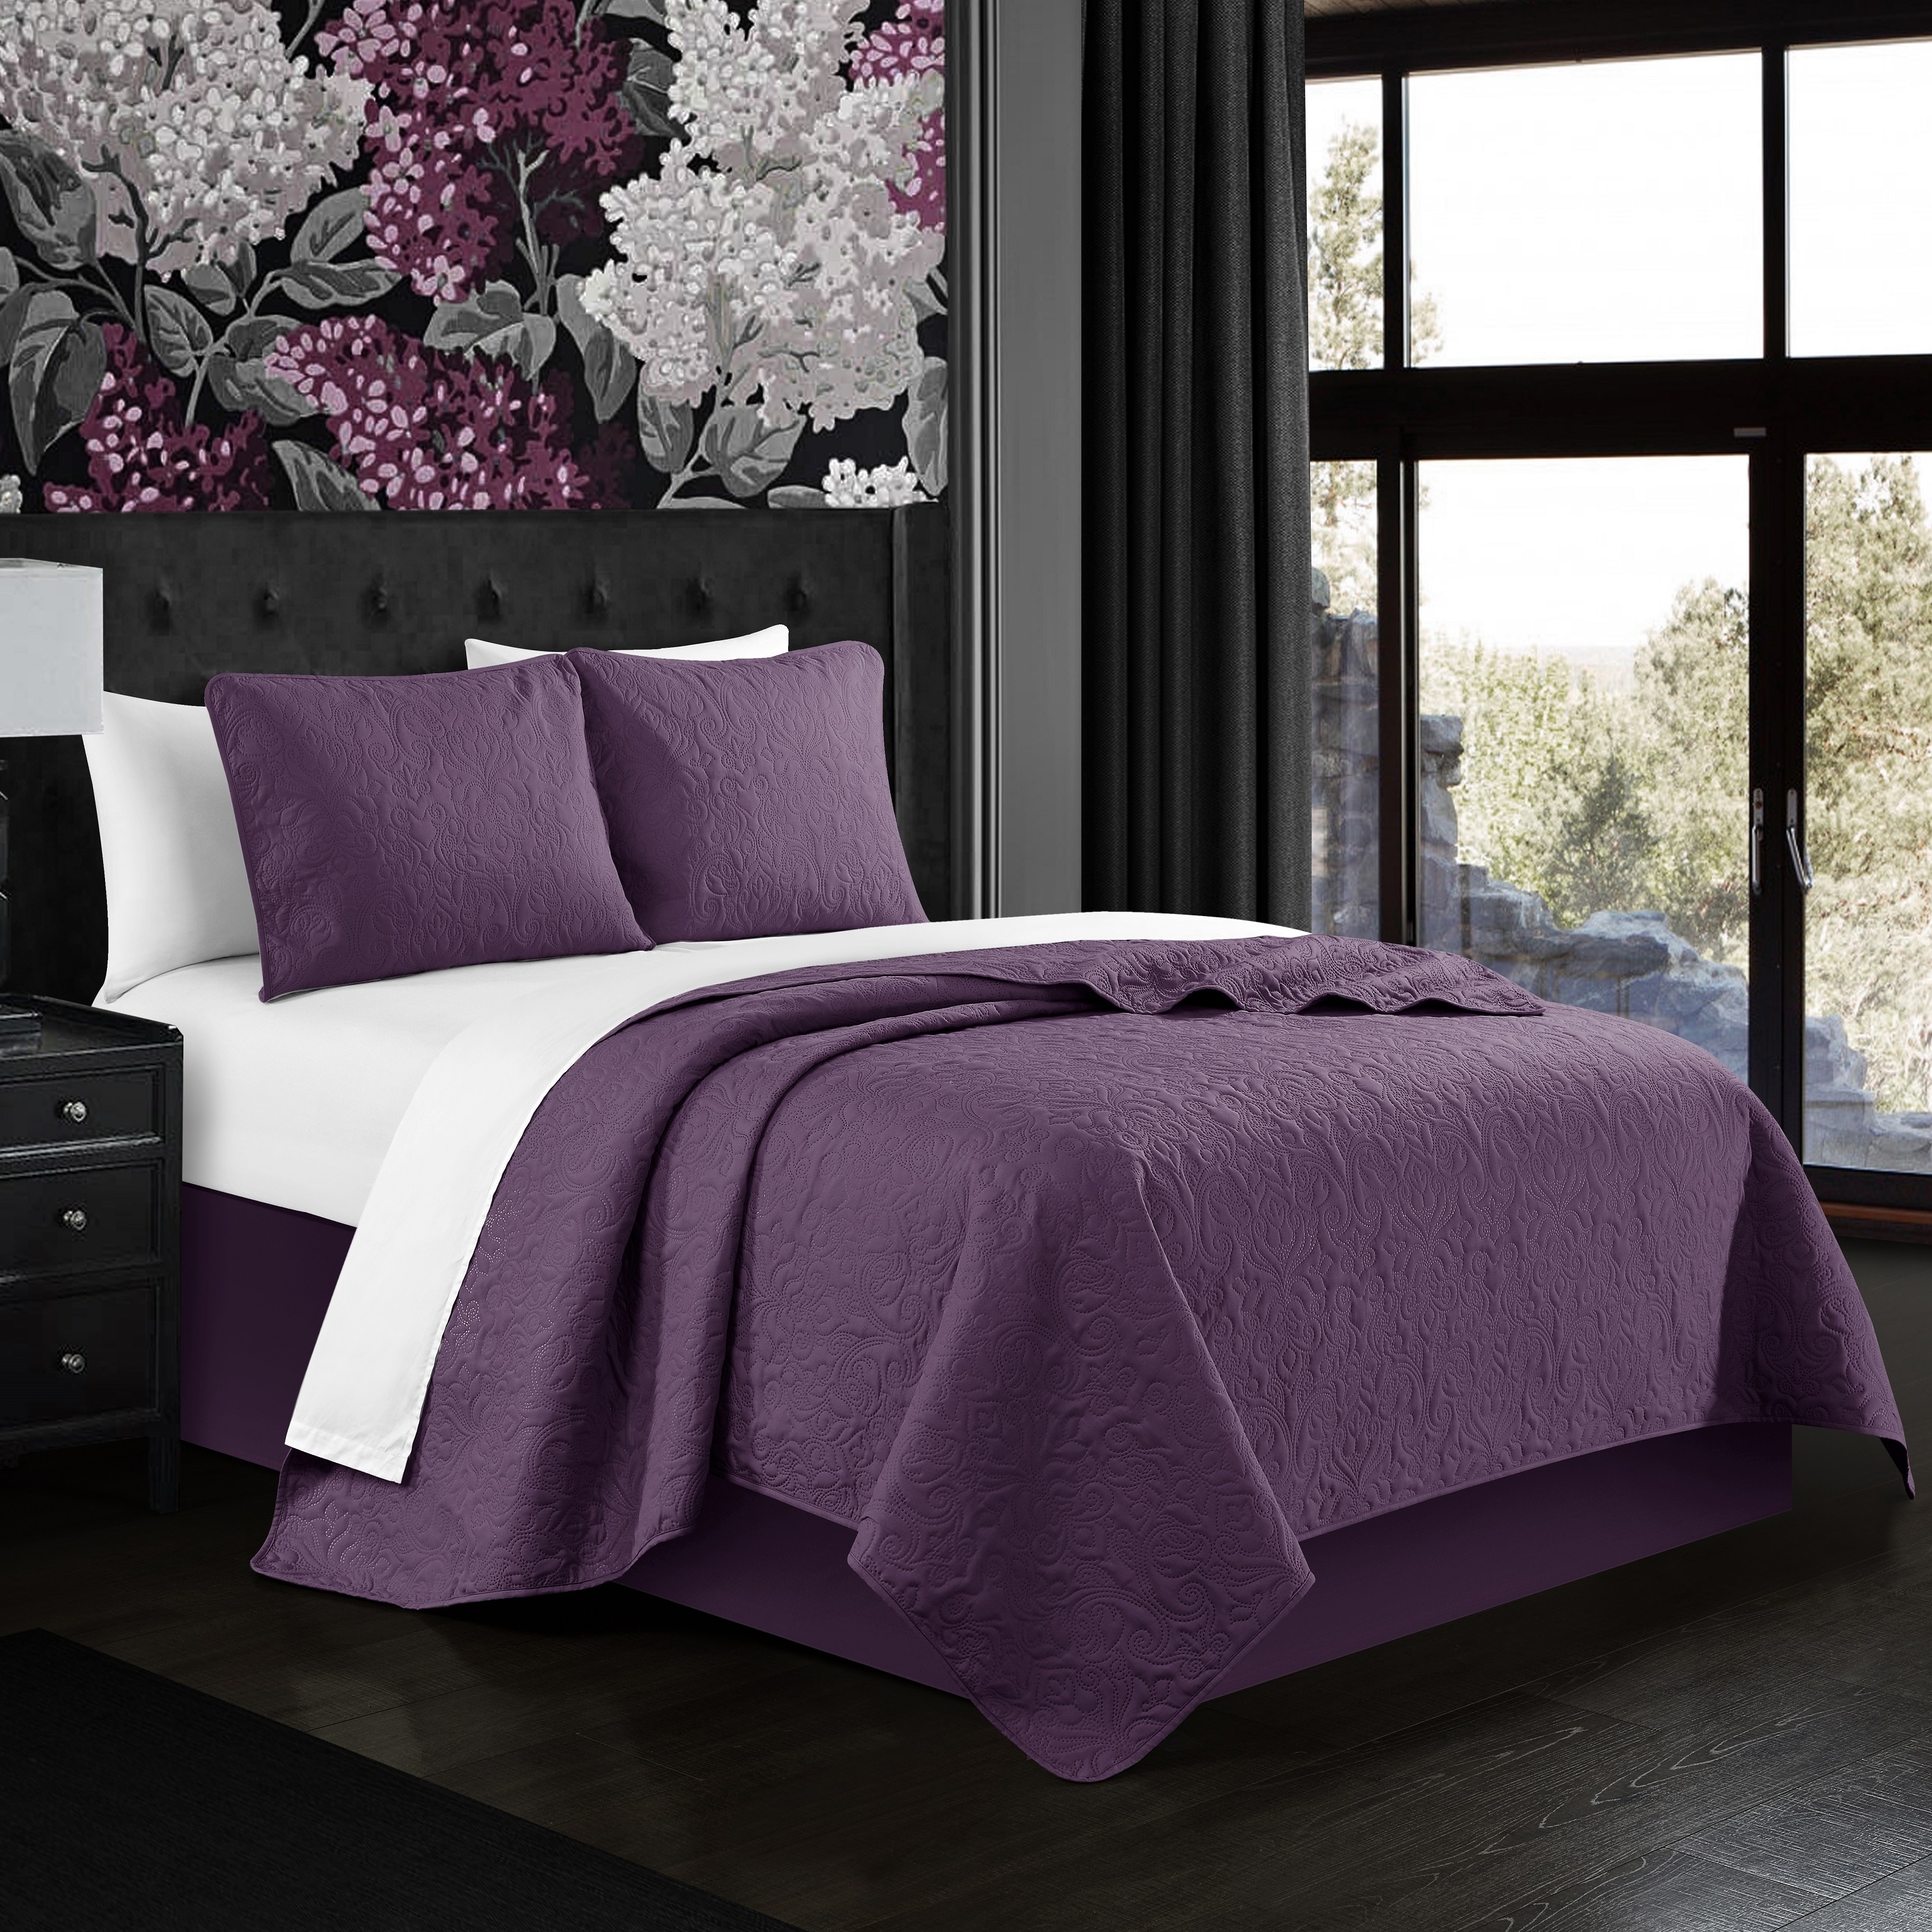 Milli 3 Or 2 Piece Quilt Set Floral Scroll Pattern Design Bedding - Purple, Queen - 3 Piece